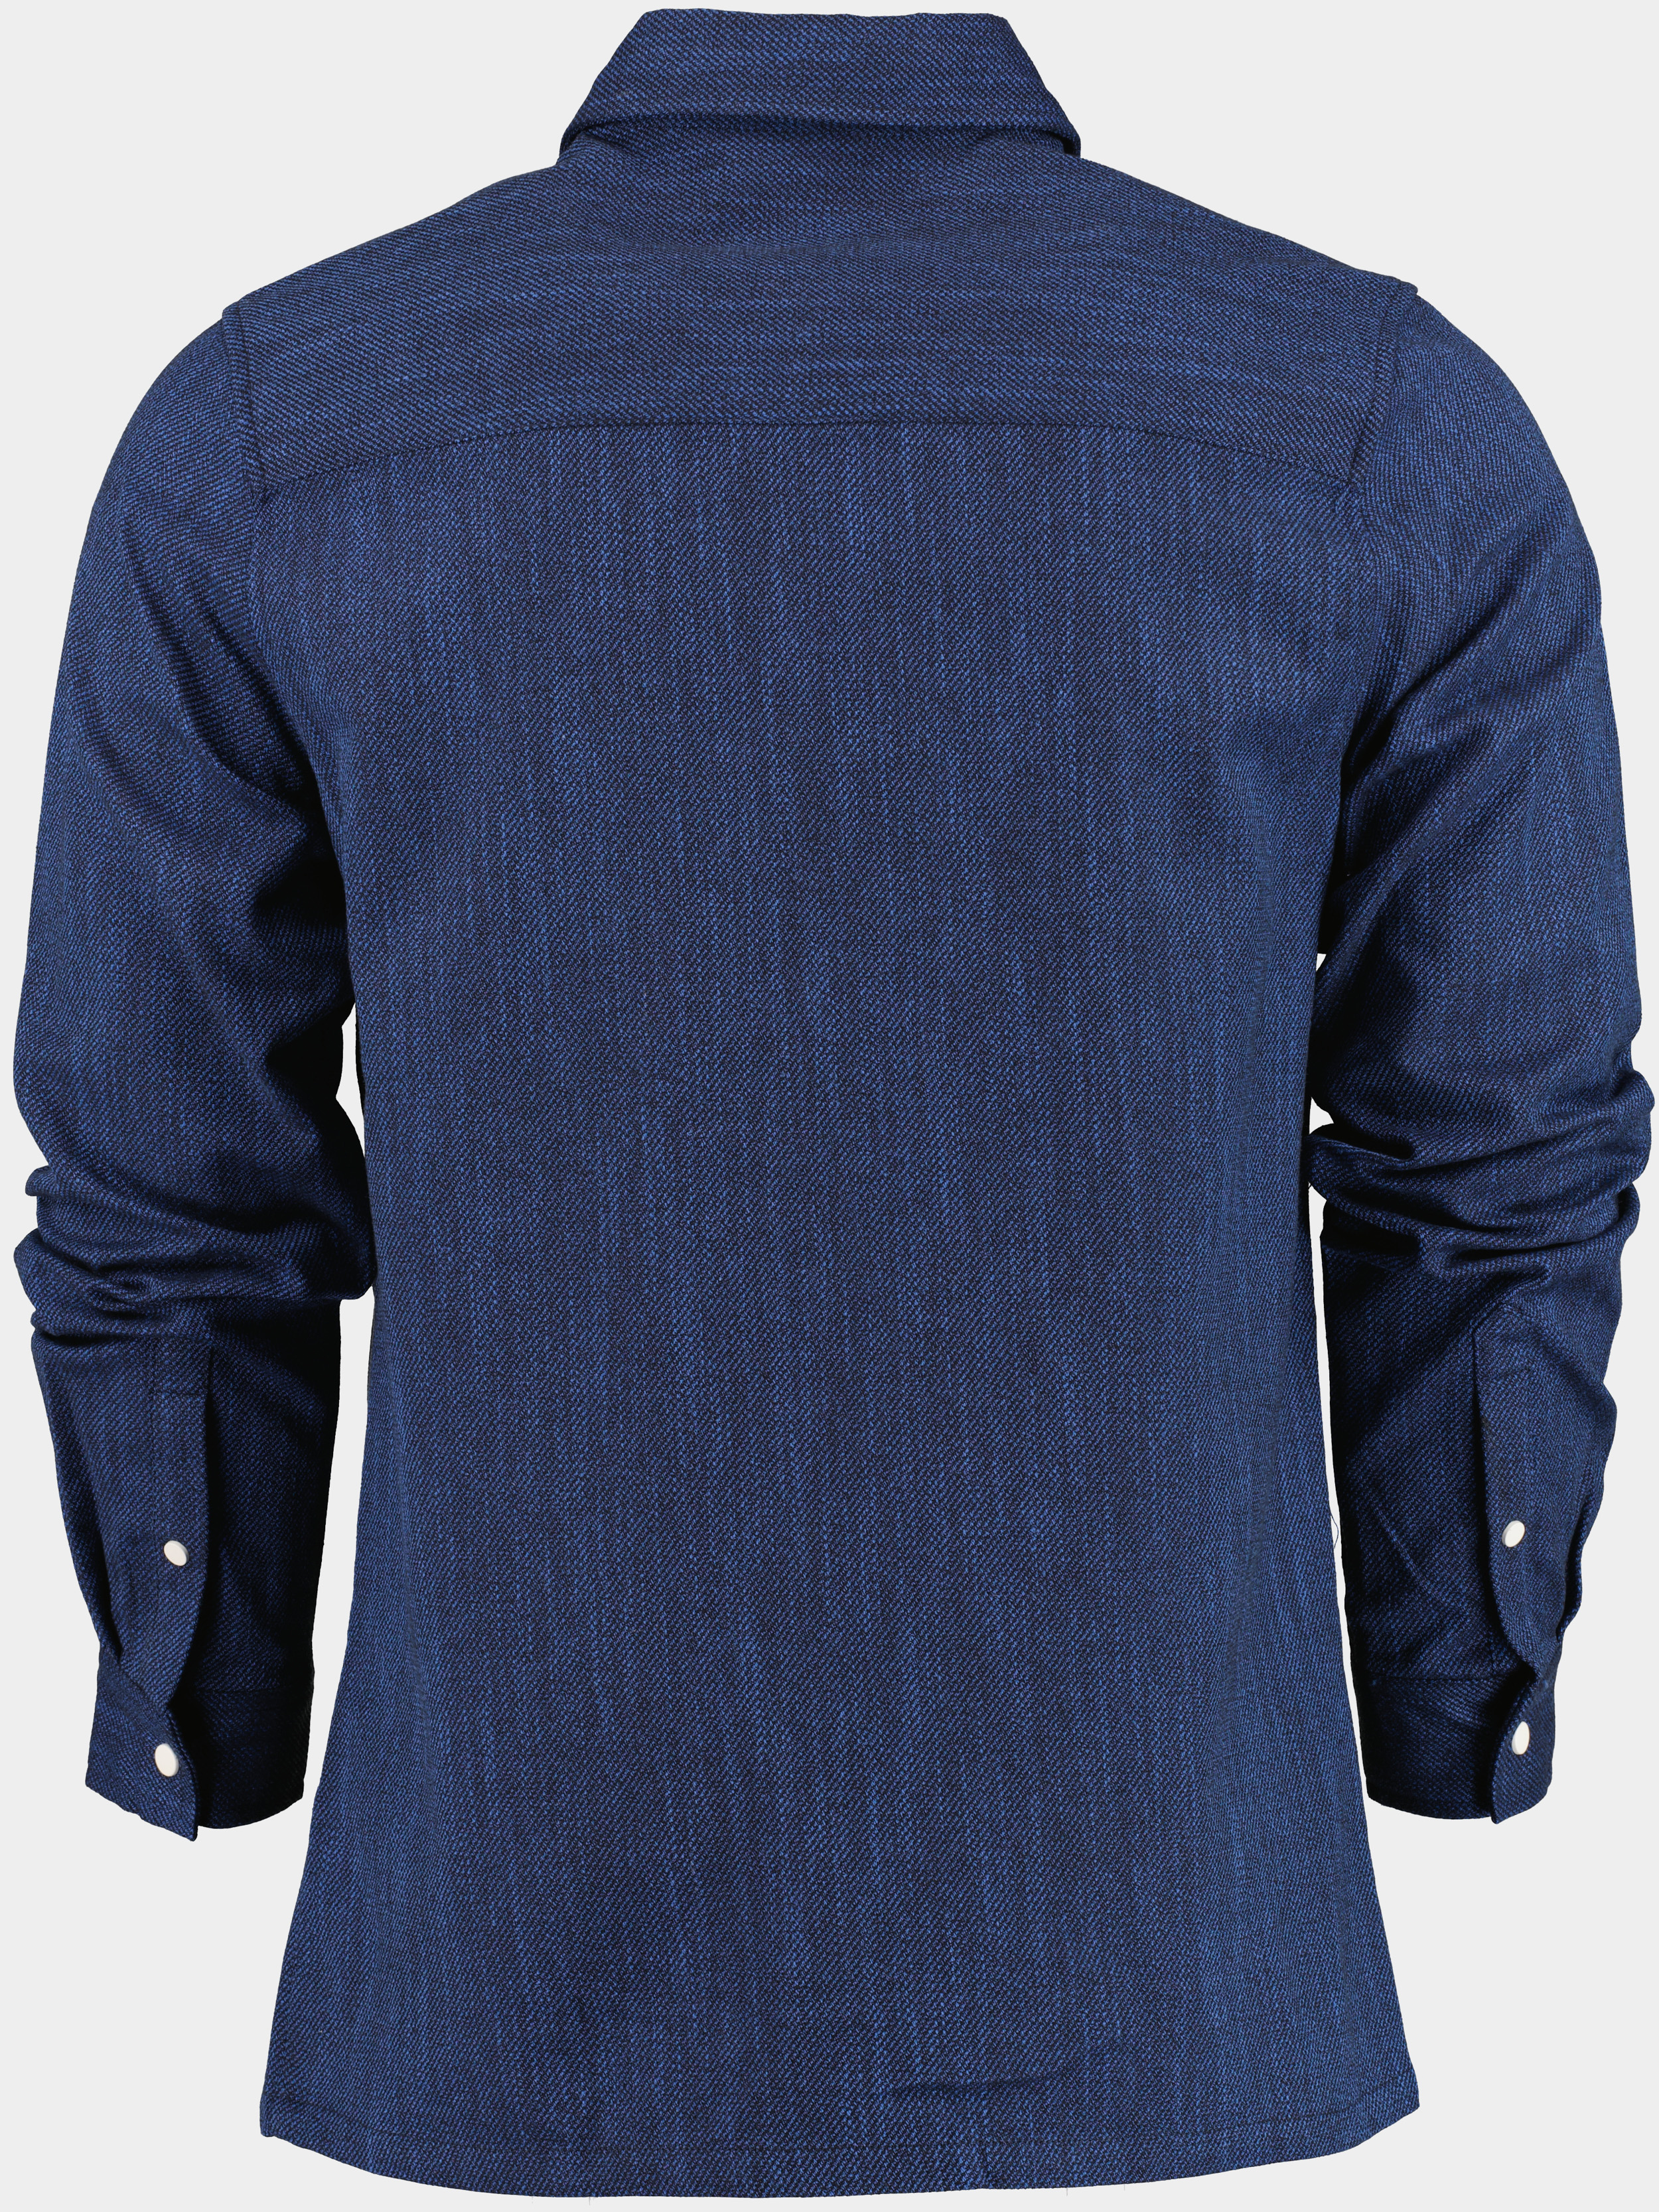 Supply & Co. Zomerjack Blauw Siv Shirtjacket 23107SI91/290 navy